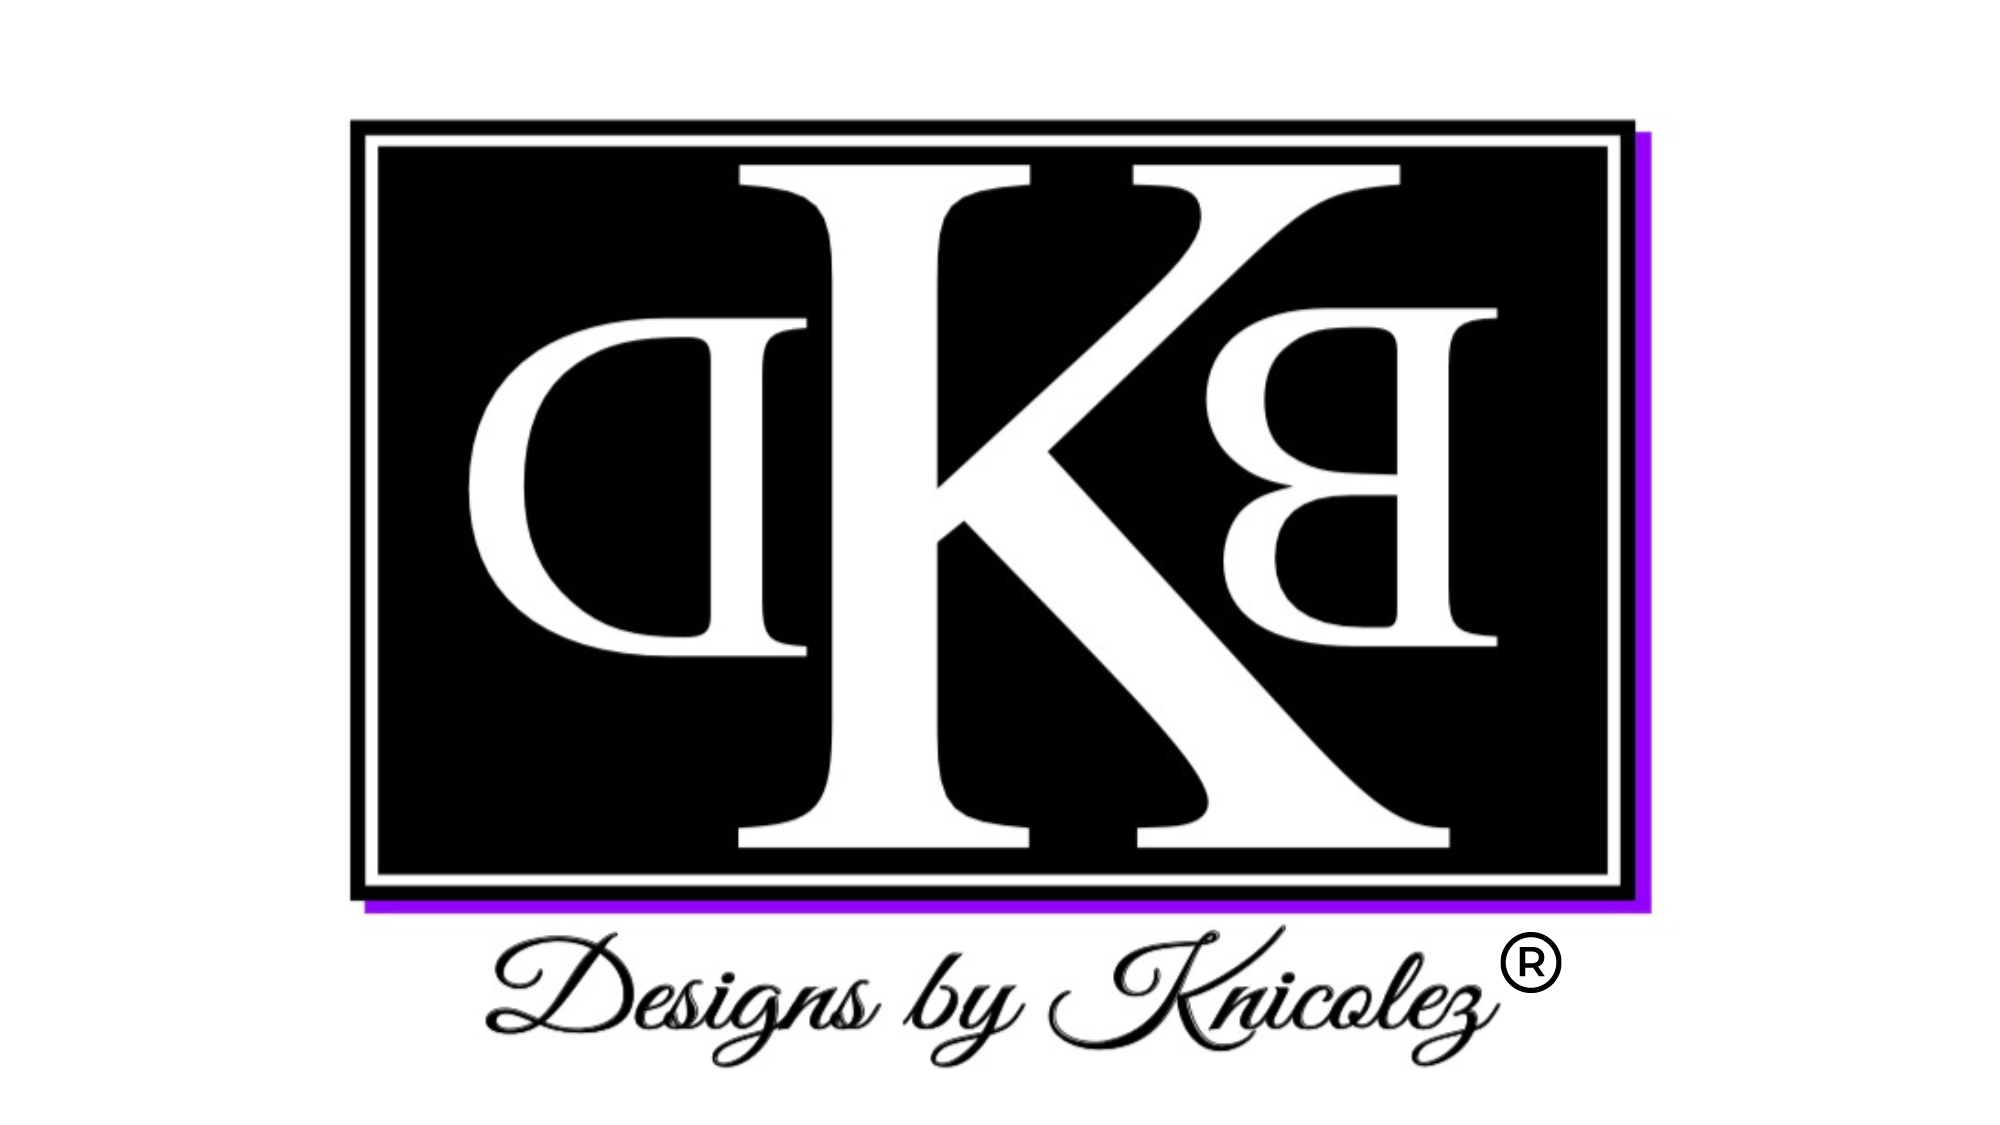 Designs By Knicolez, Inc. ®